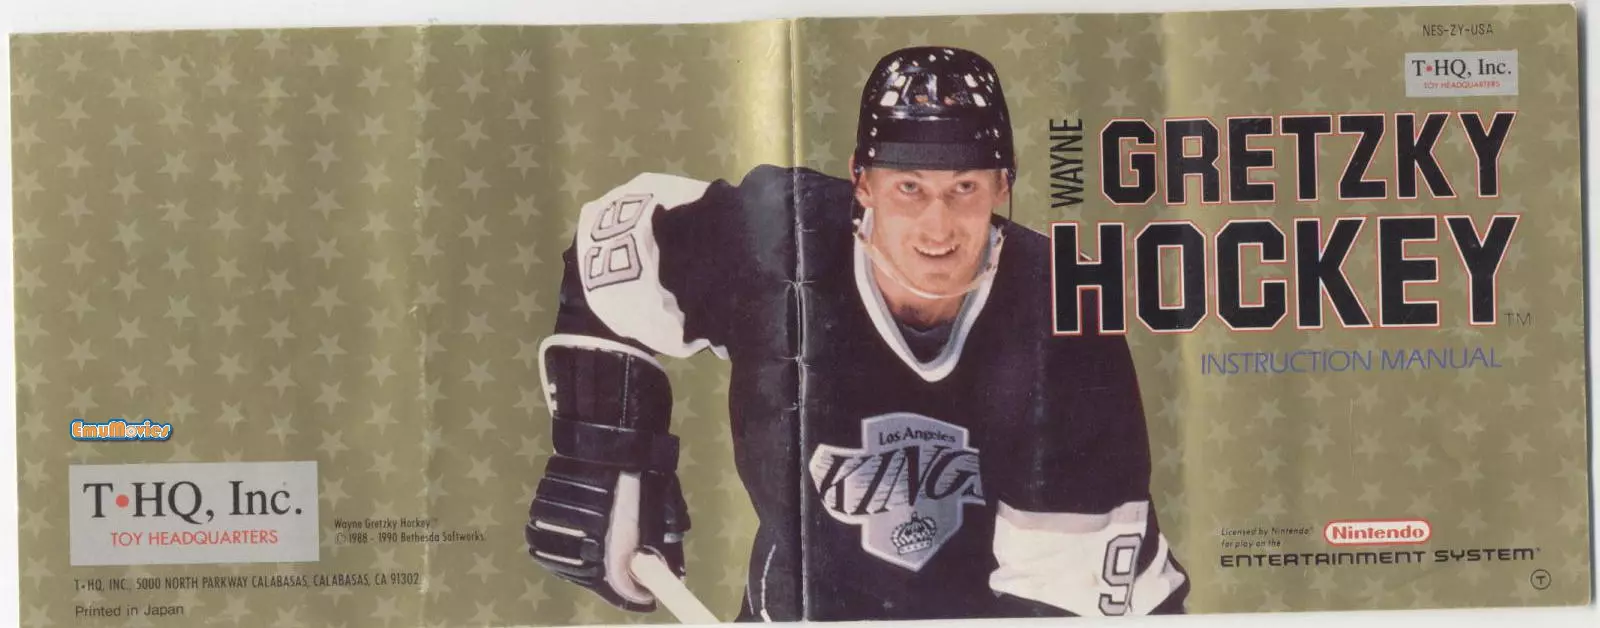 manual for Wayne Gretzky Hockey